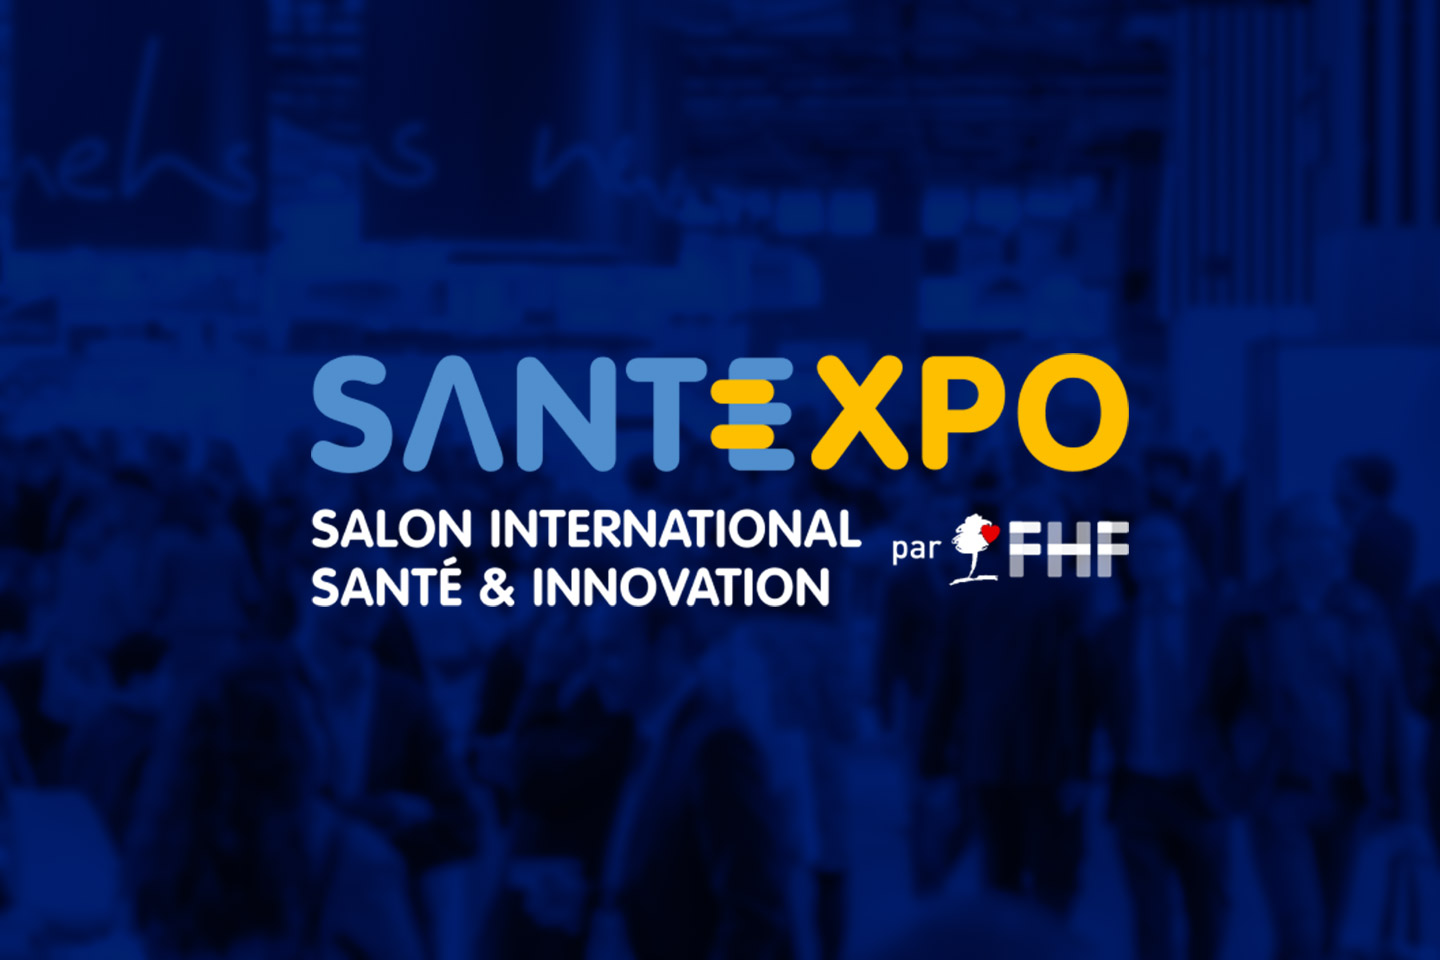 SANTEXPO Salon international Santé & Innovation par FHF